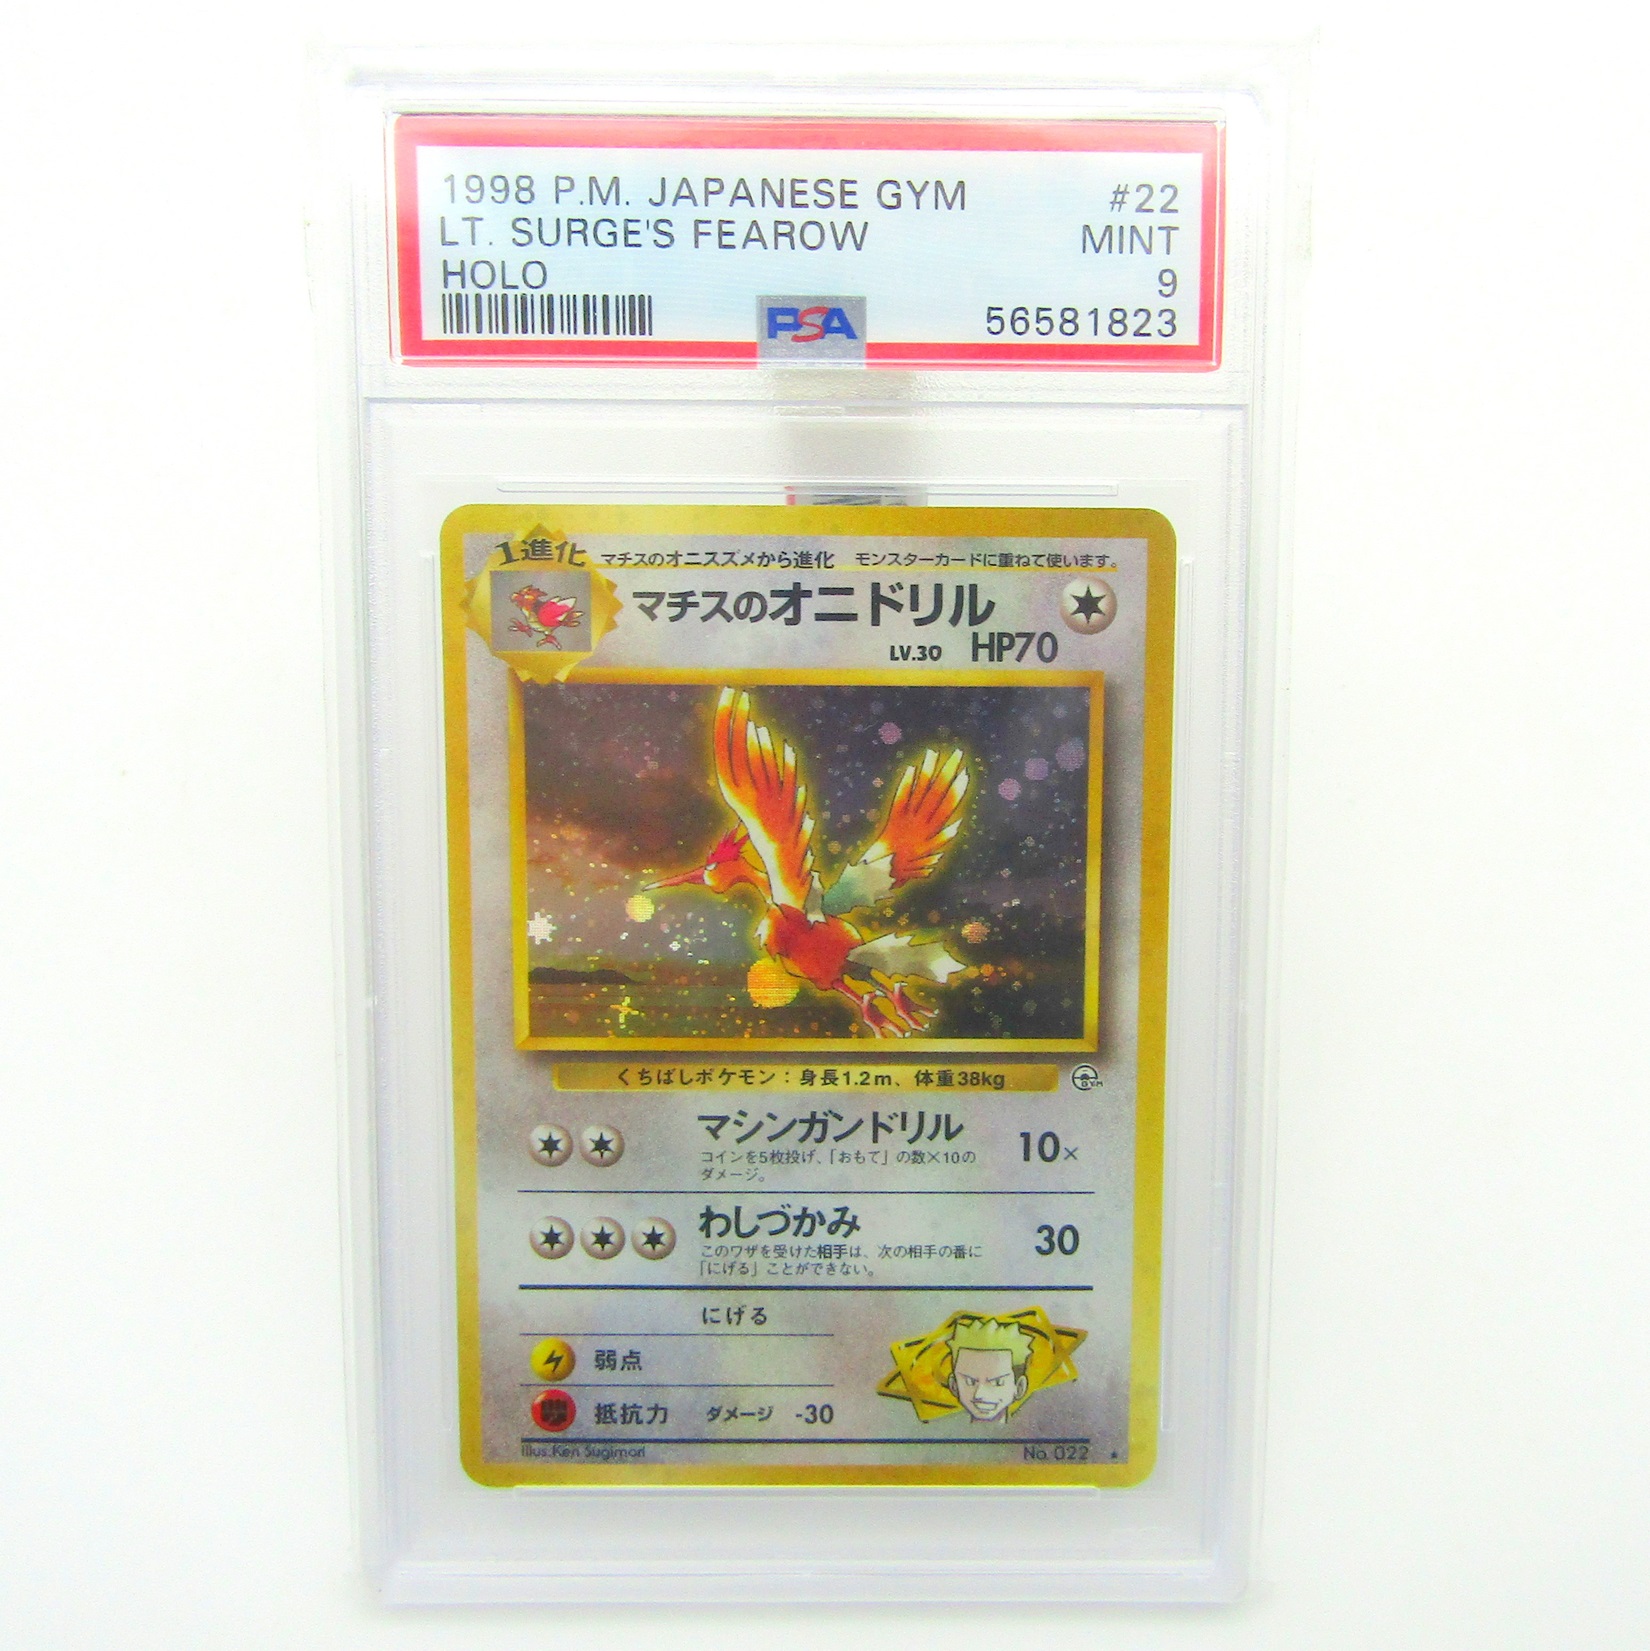 Pokémon Card. 1998. JPN. Leaders' Stadium Gym. Lt. Surge's Fearow holo. PSA 9